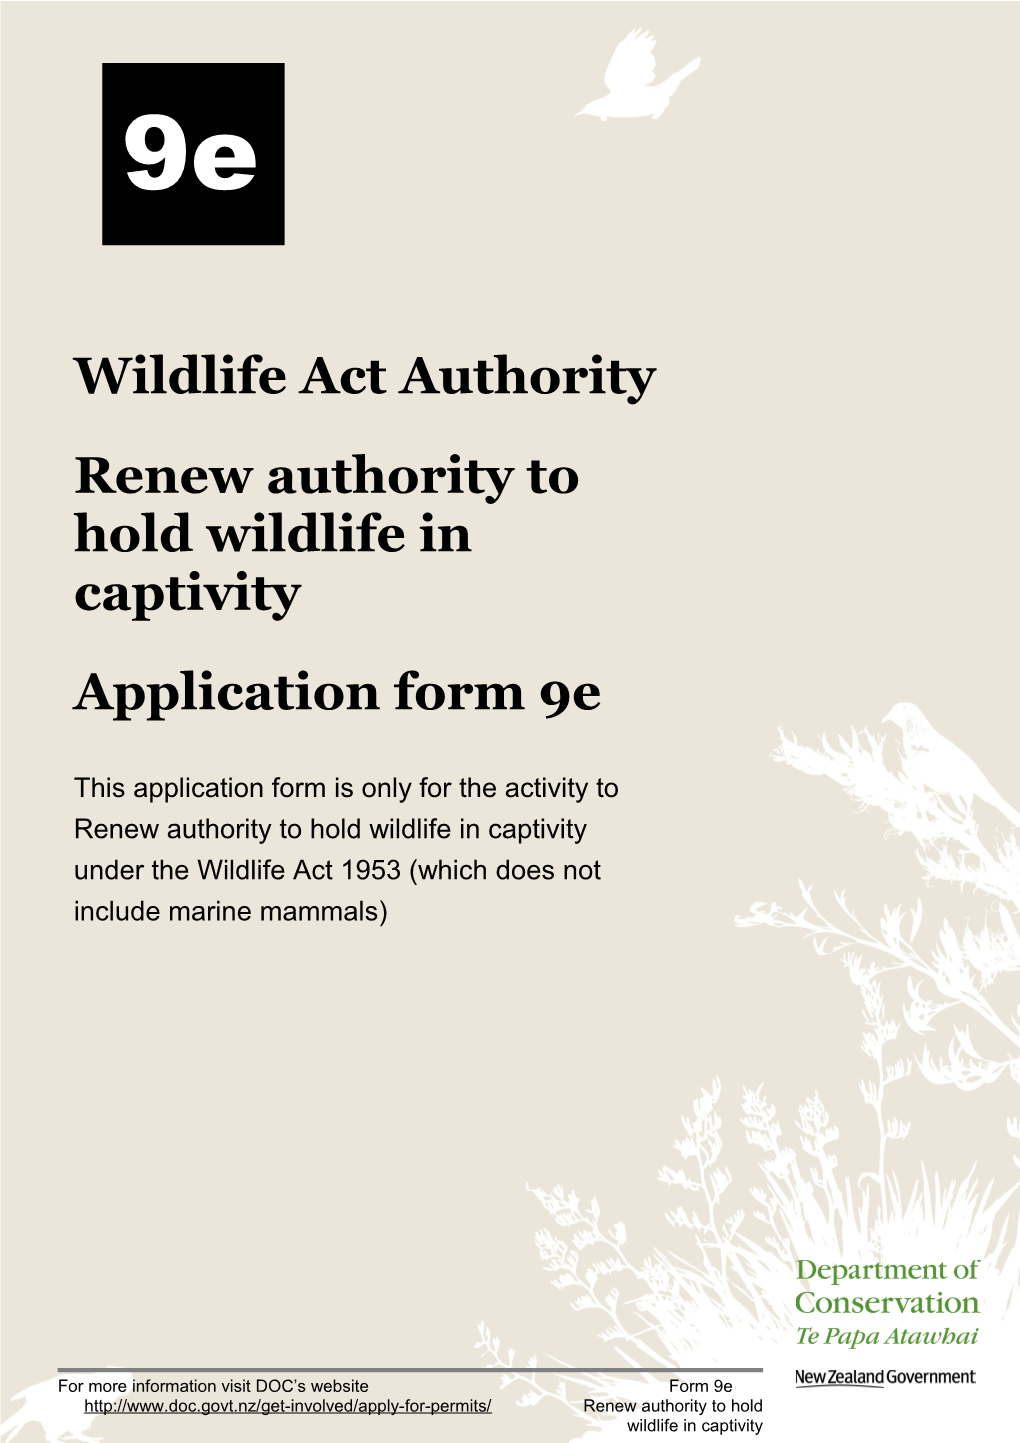 Renew Authority to Hold Wildlife in Captivity